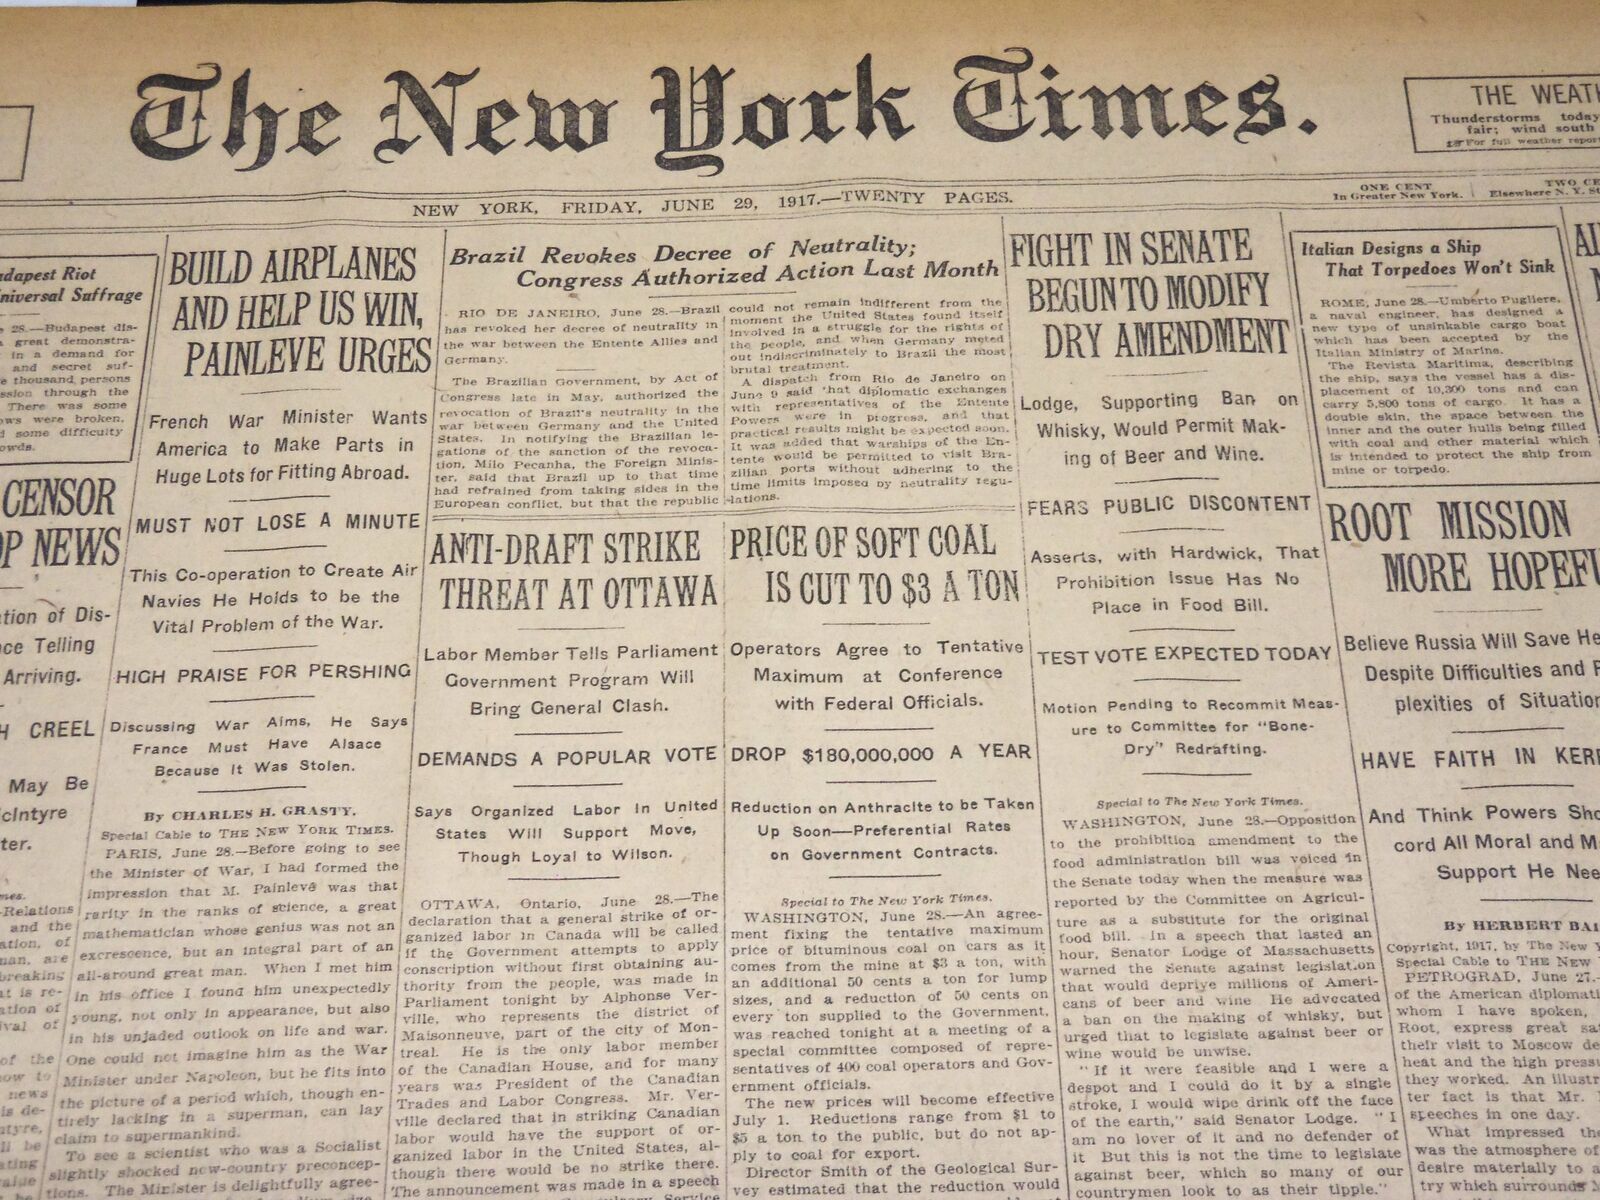 1917 JUNE 29 NEW YORK TIMES NEWSPAPER - FIGHT TO MODIFY DRY AMENDMENT - NT 7800